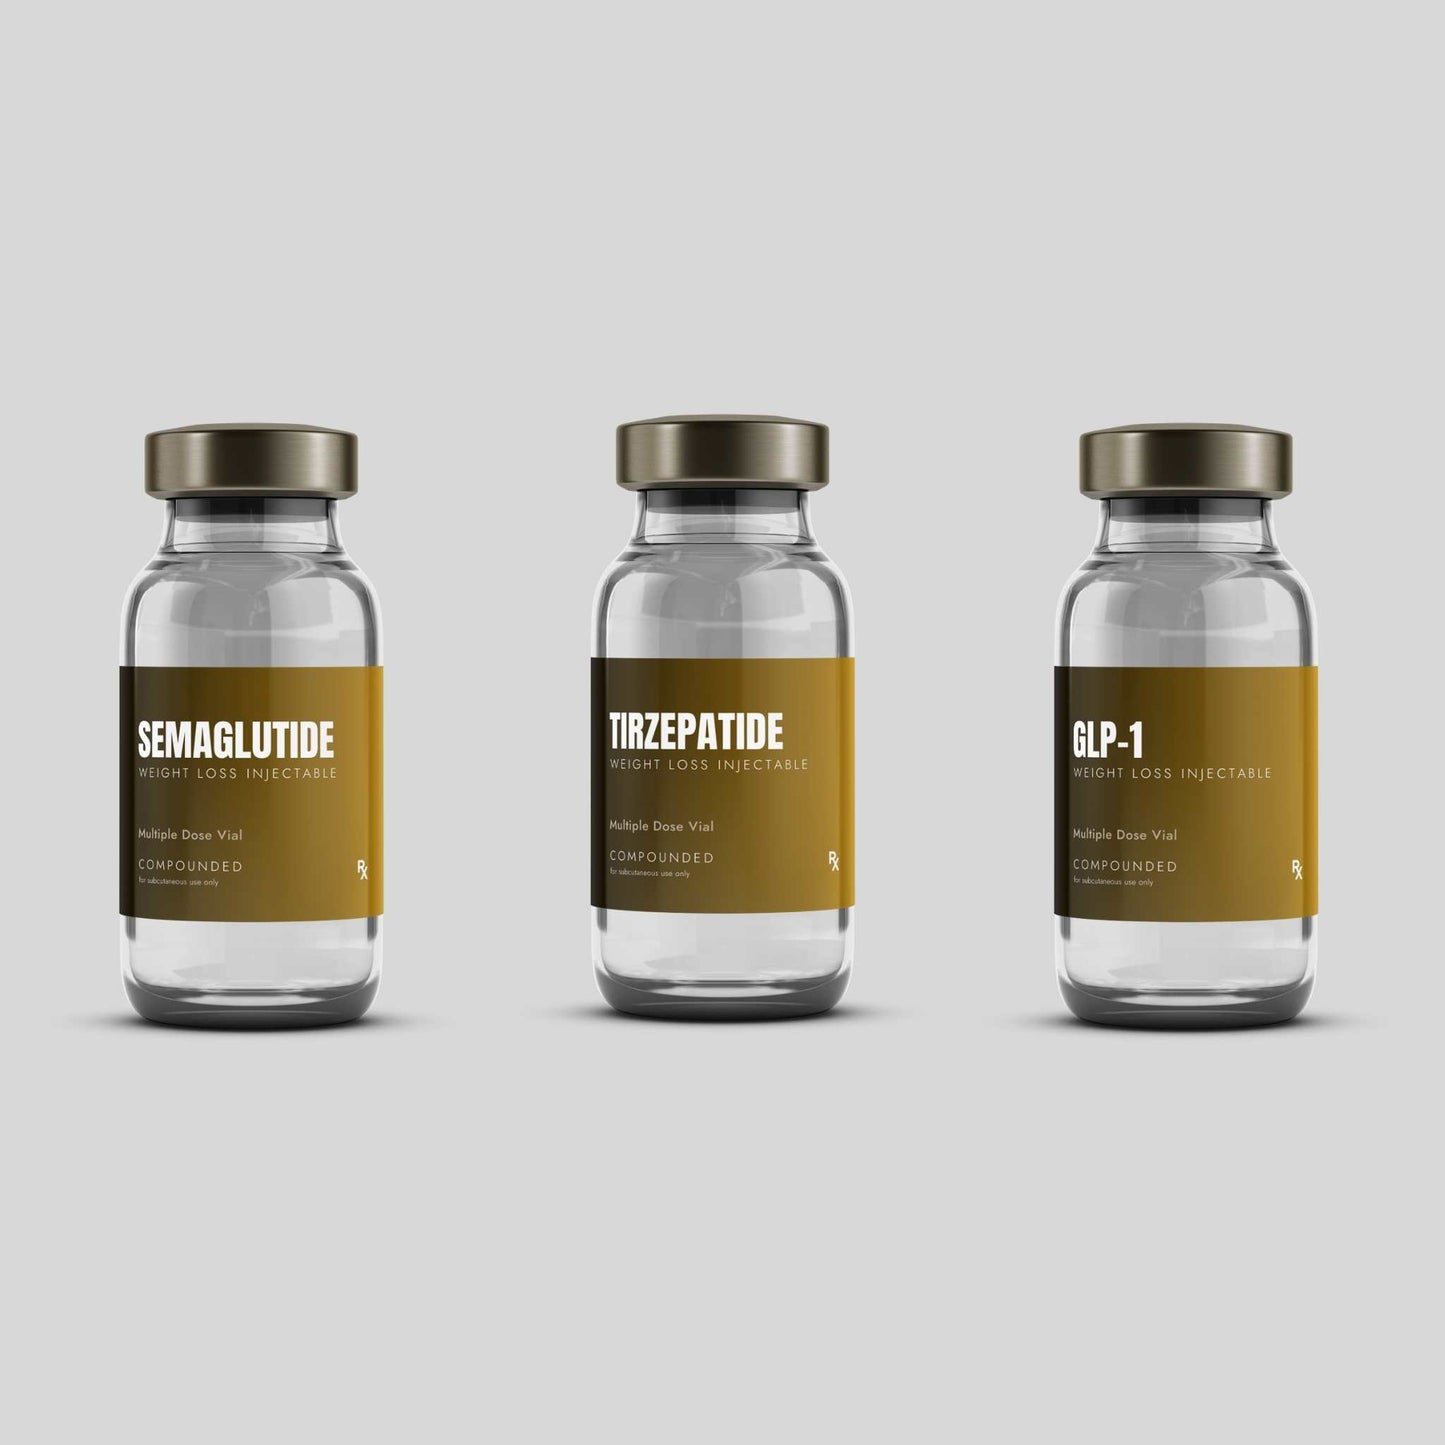 glp1-semaglutide-tirzepatide-bottles